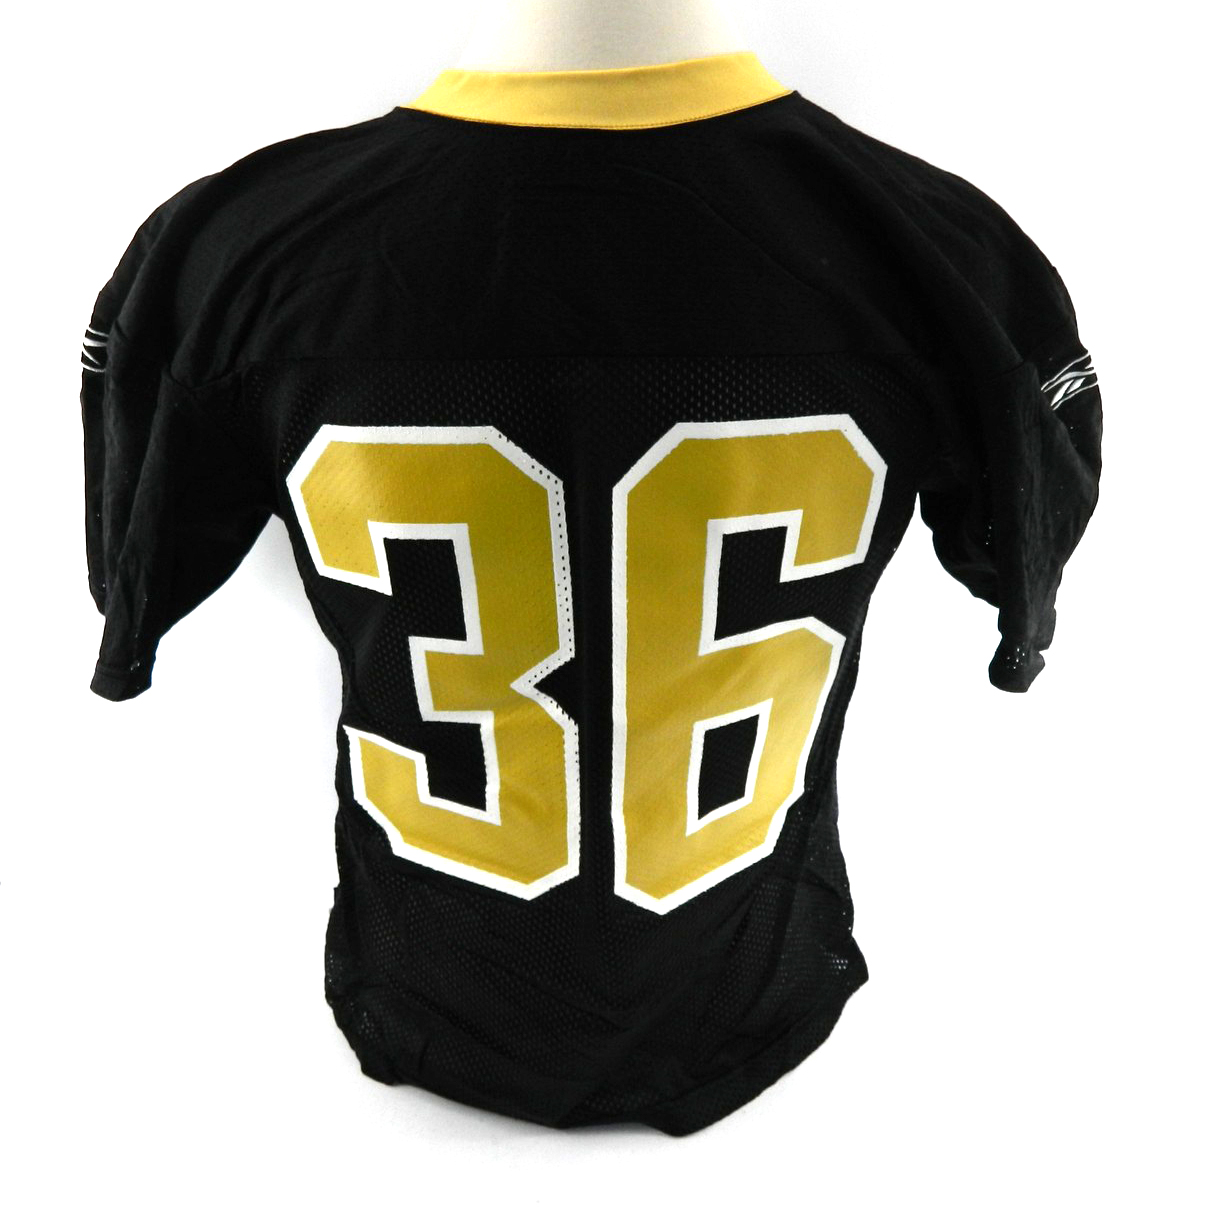 2007 New î€€Orleansî€ î€€Saintsî€ #36 Game Issued Black Practice Jersey eBay